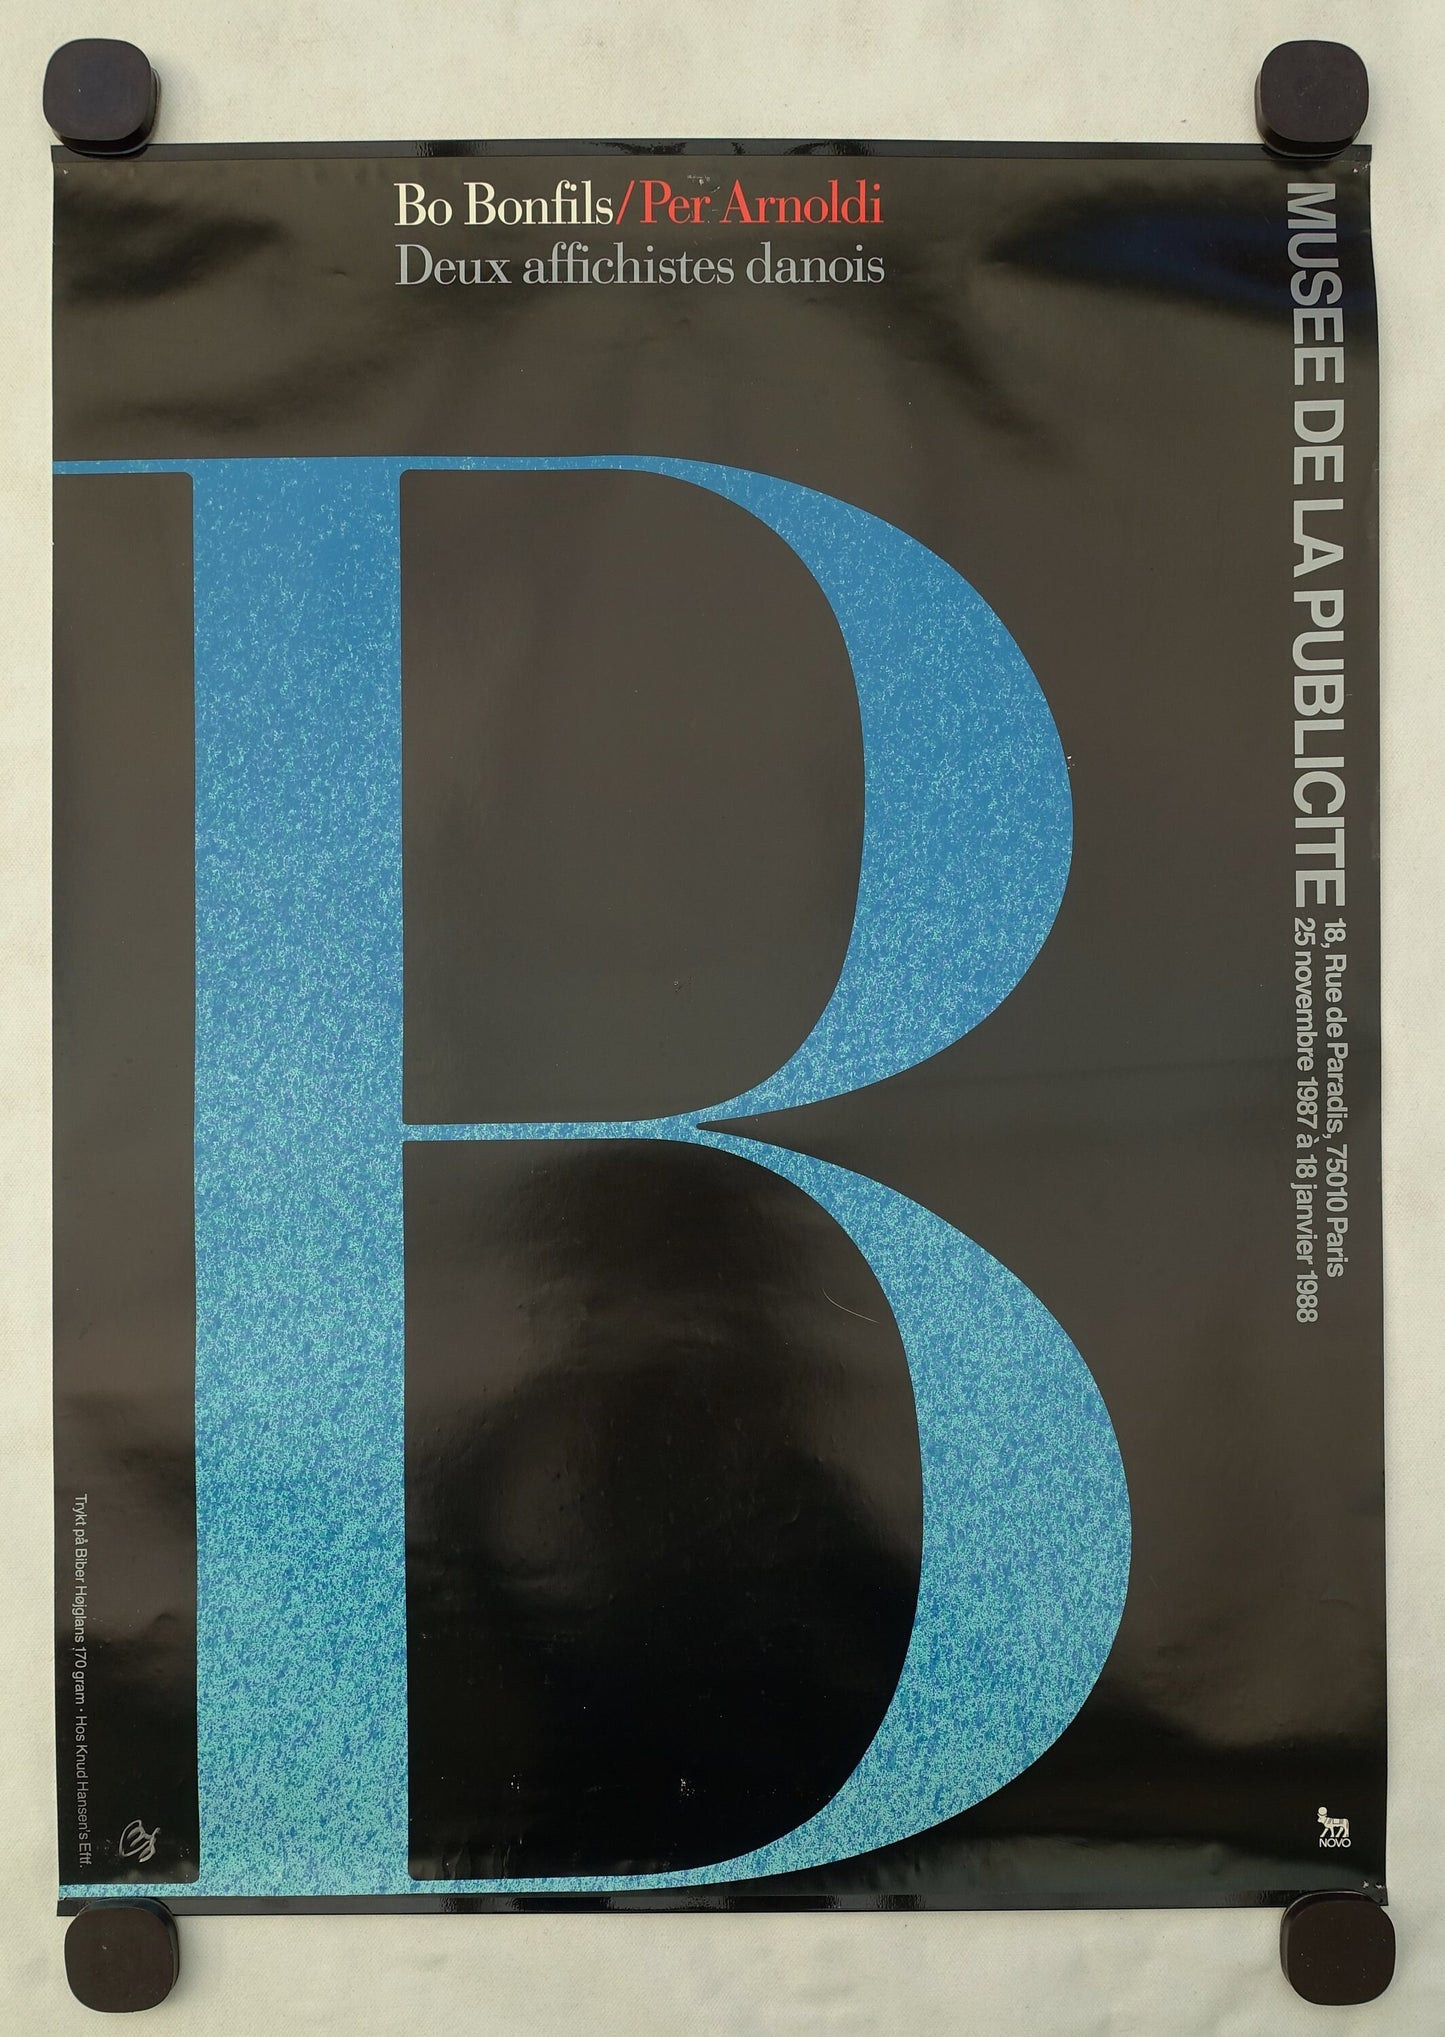 1987 Arnoldi Exhibition Poster - Original Vintage Poster